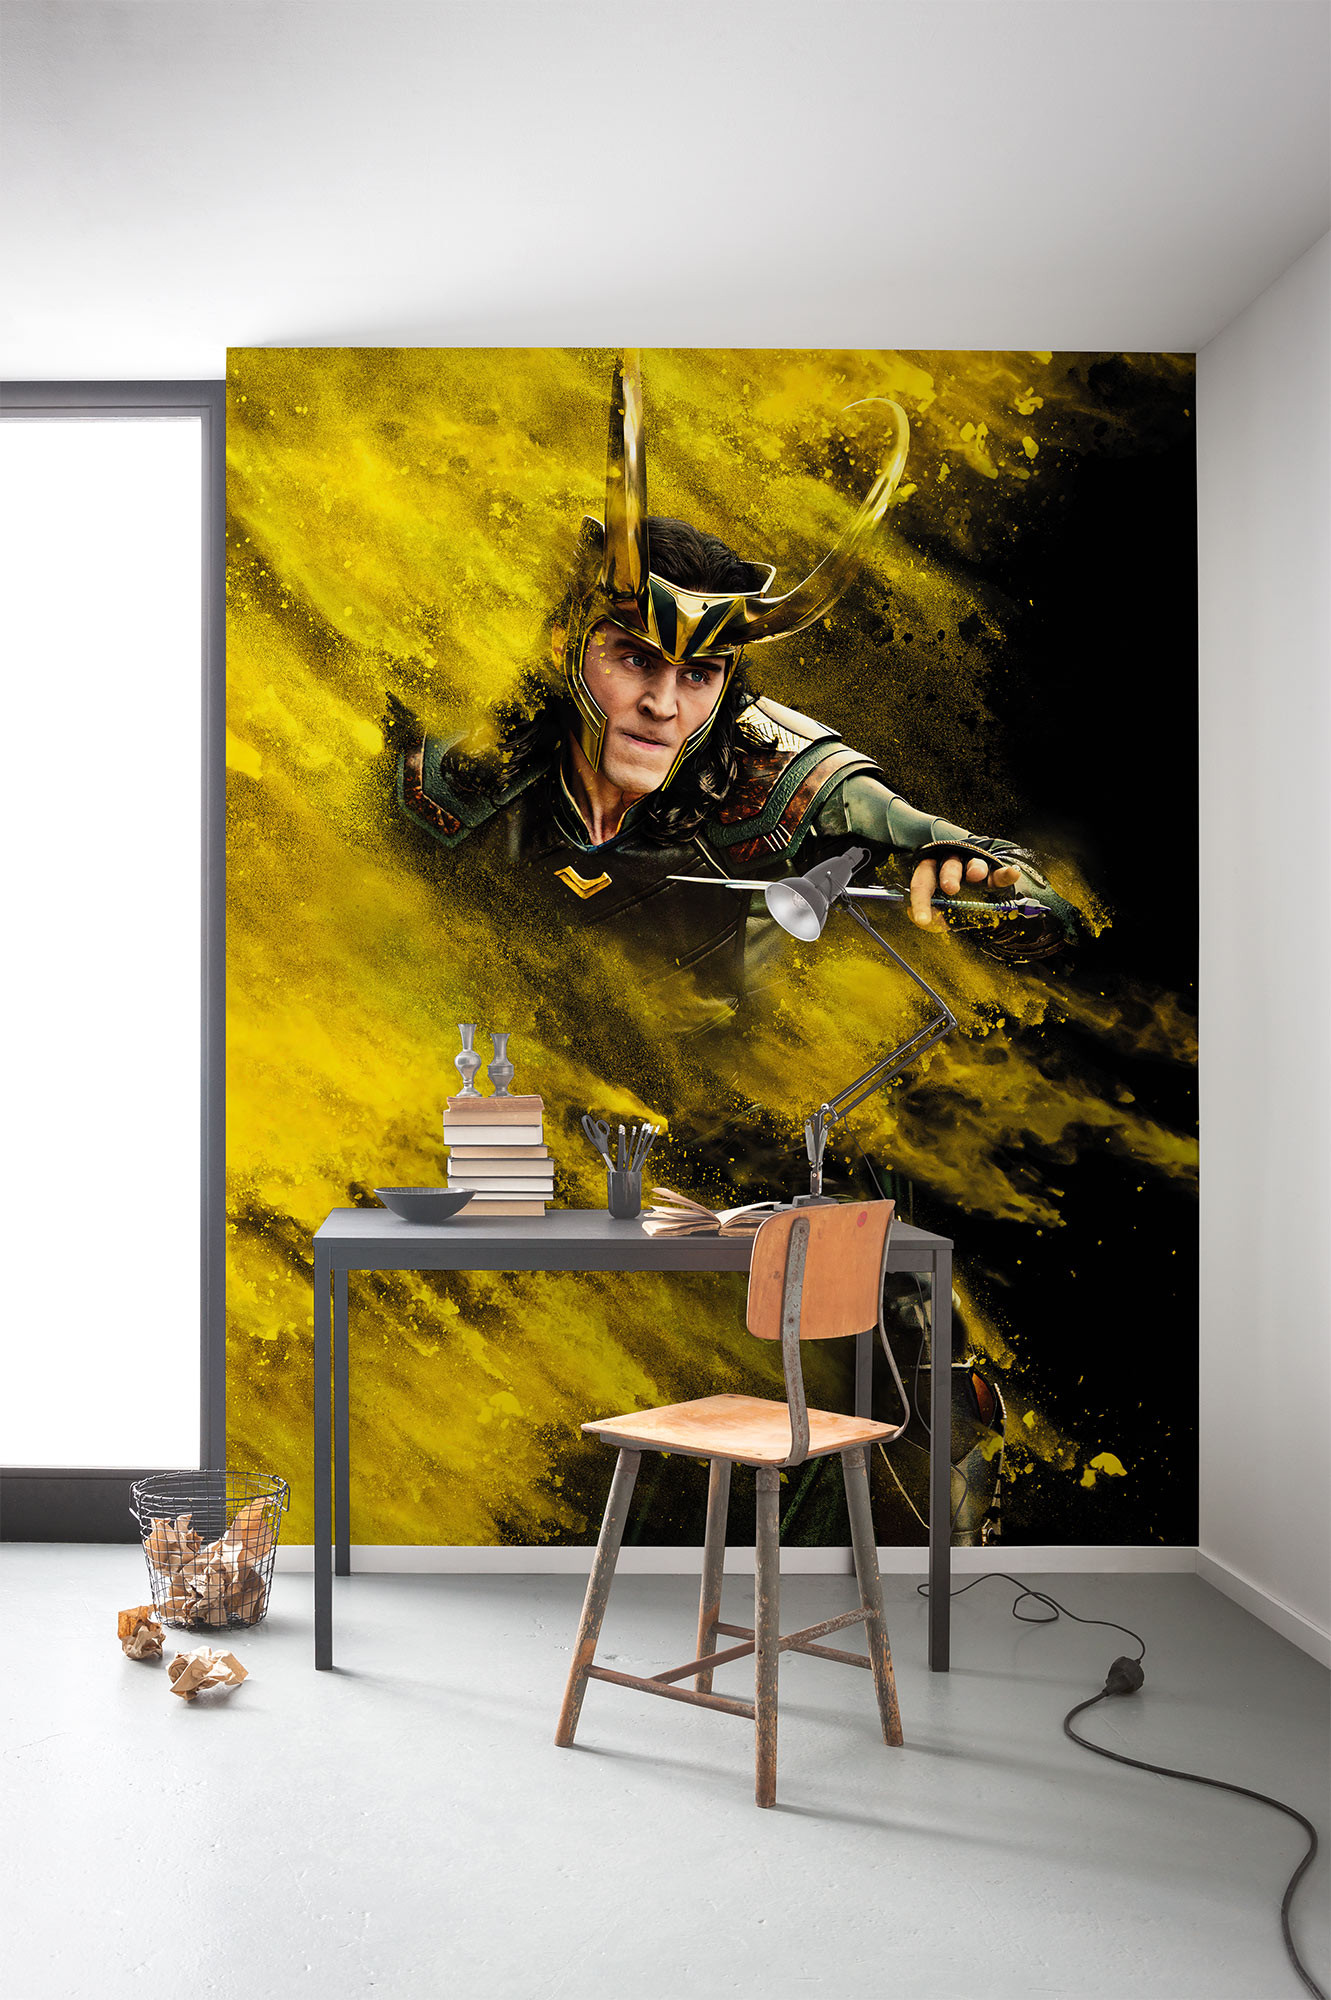 100+] Loki Wallpapers